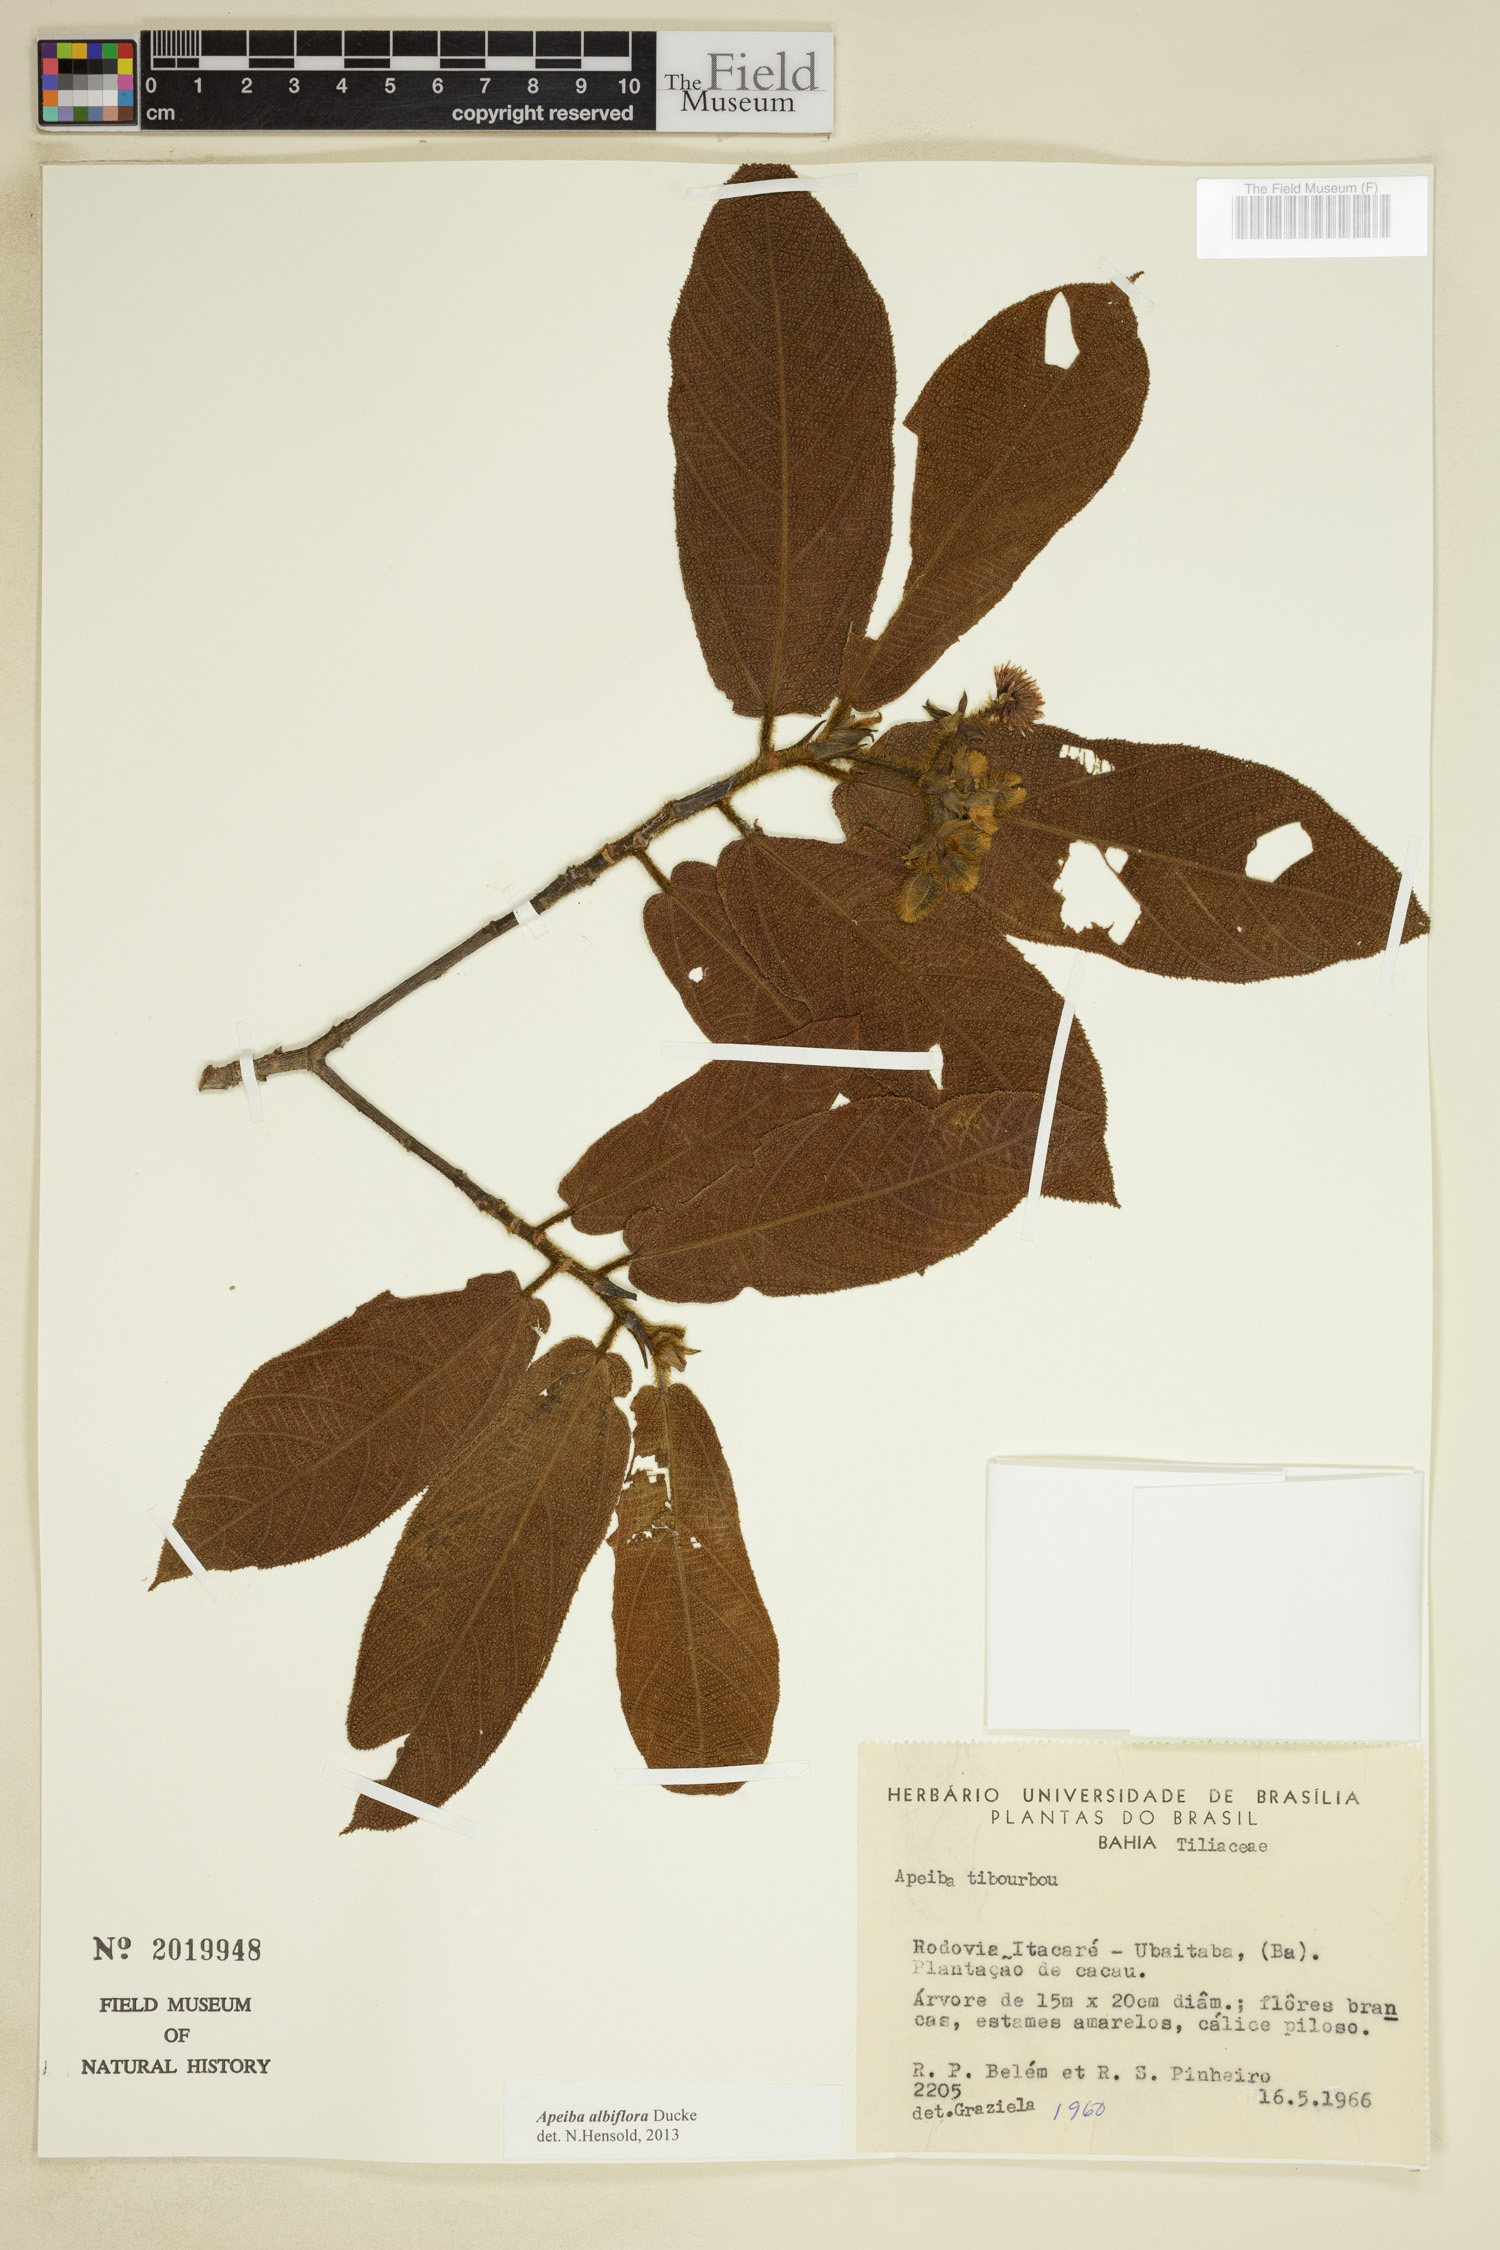 Apeiba albiflora image